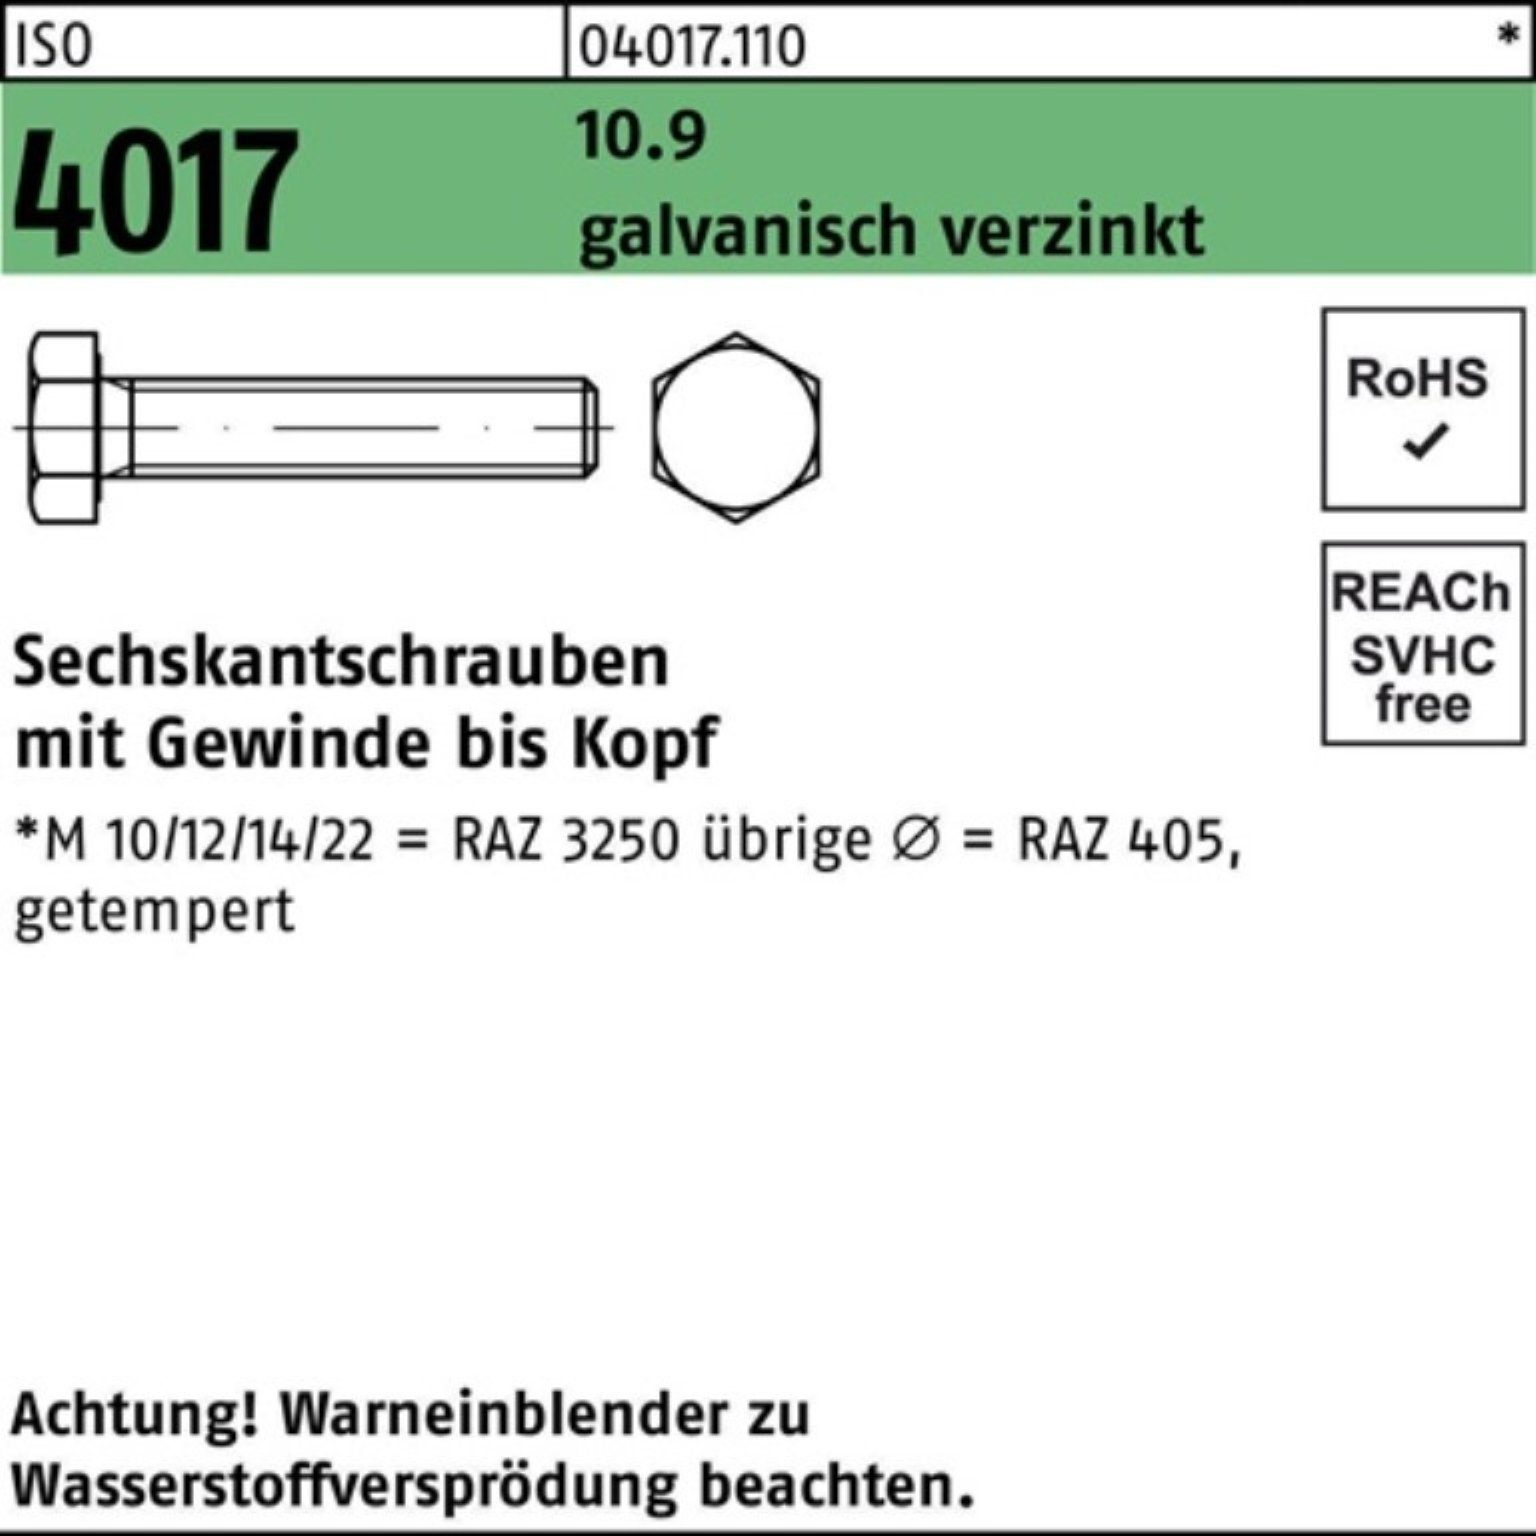 Sechskantschraube Pack 4017 100er St Bufab 60 50 VG ISO 10.9 galv.verz. Sechskantschraube M14x